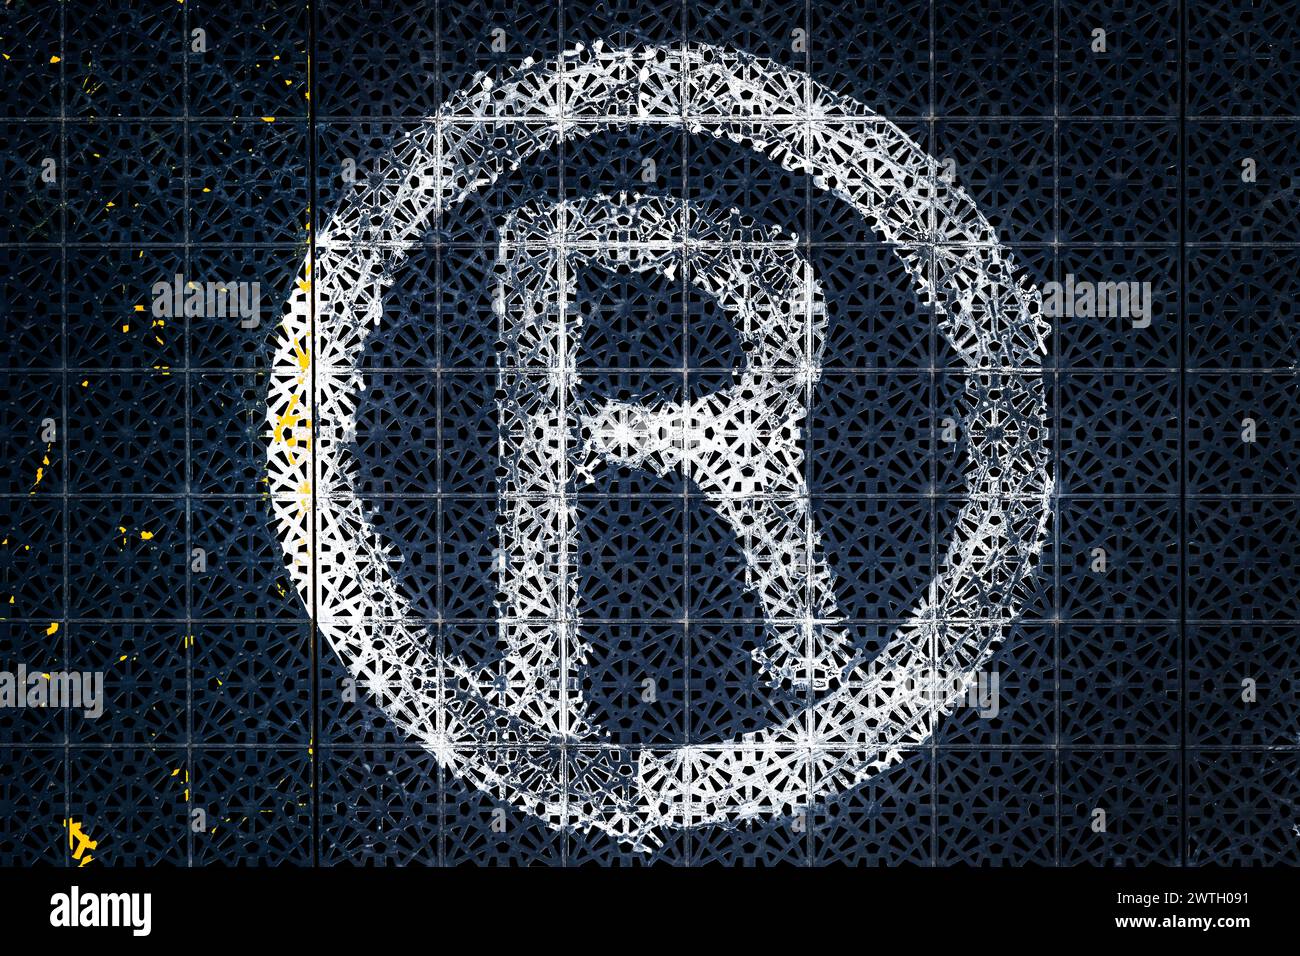 R Registered trademark symbol on non slip plastic flooring, close up Stock Photo